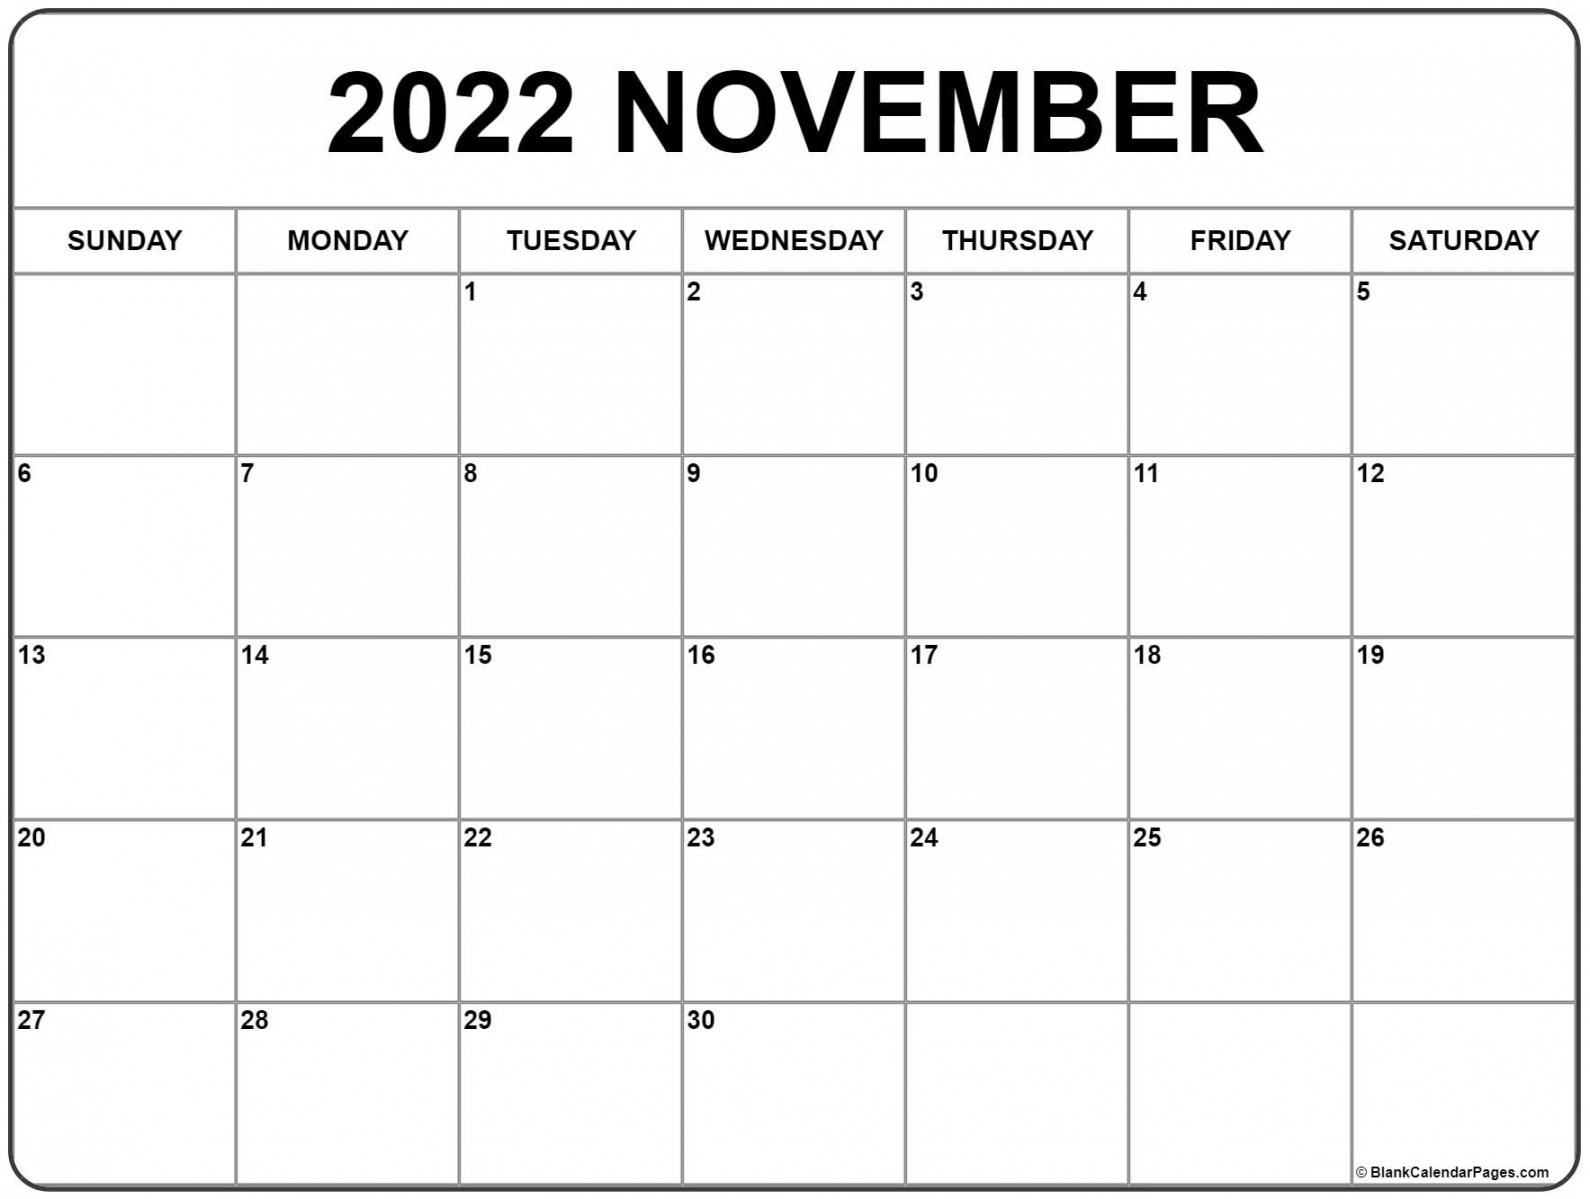 Free Printable November Calendar - Printable - November  calendar  free printable calendar